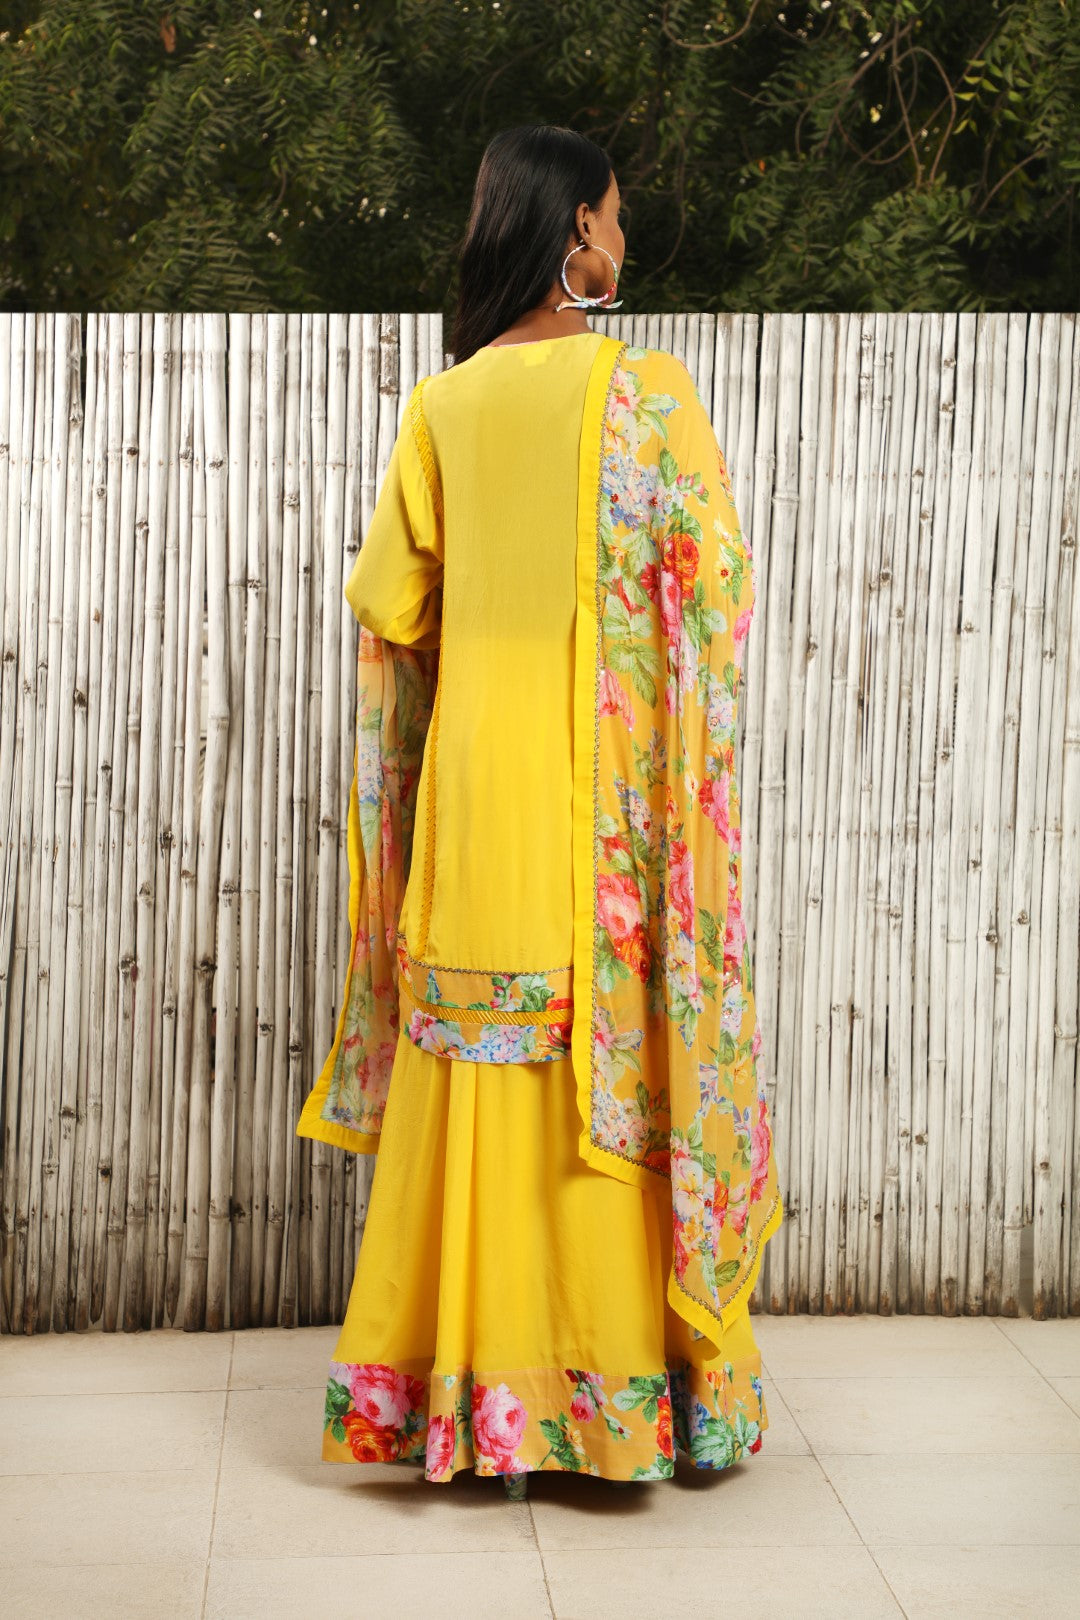 Pitambari yellow crepe kurta with teamed with skirt and highlighted ochre dupatta.